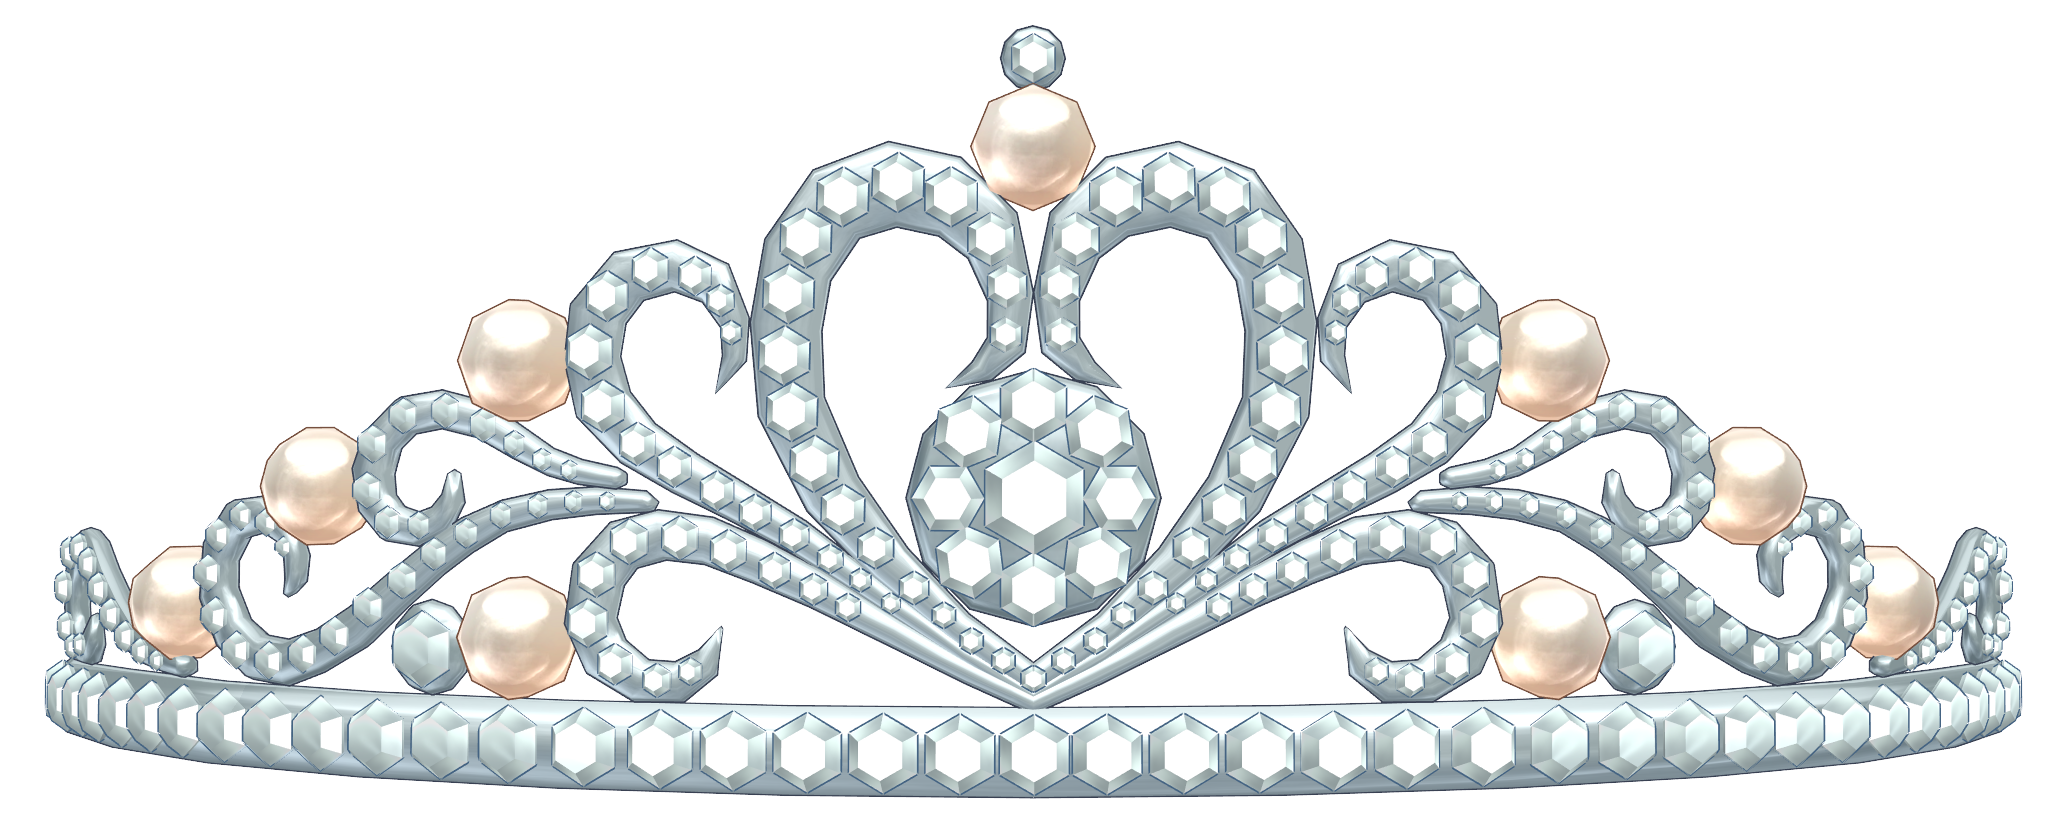 Silver Princess Crown PNG Transparent Image